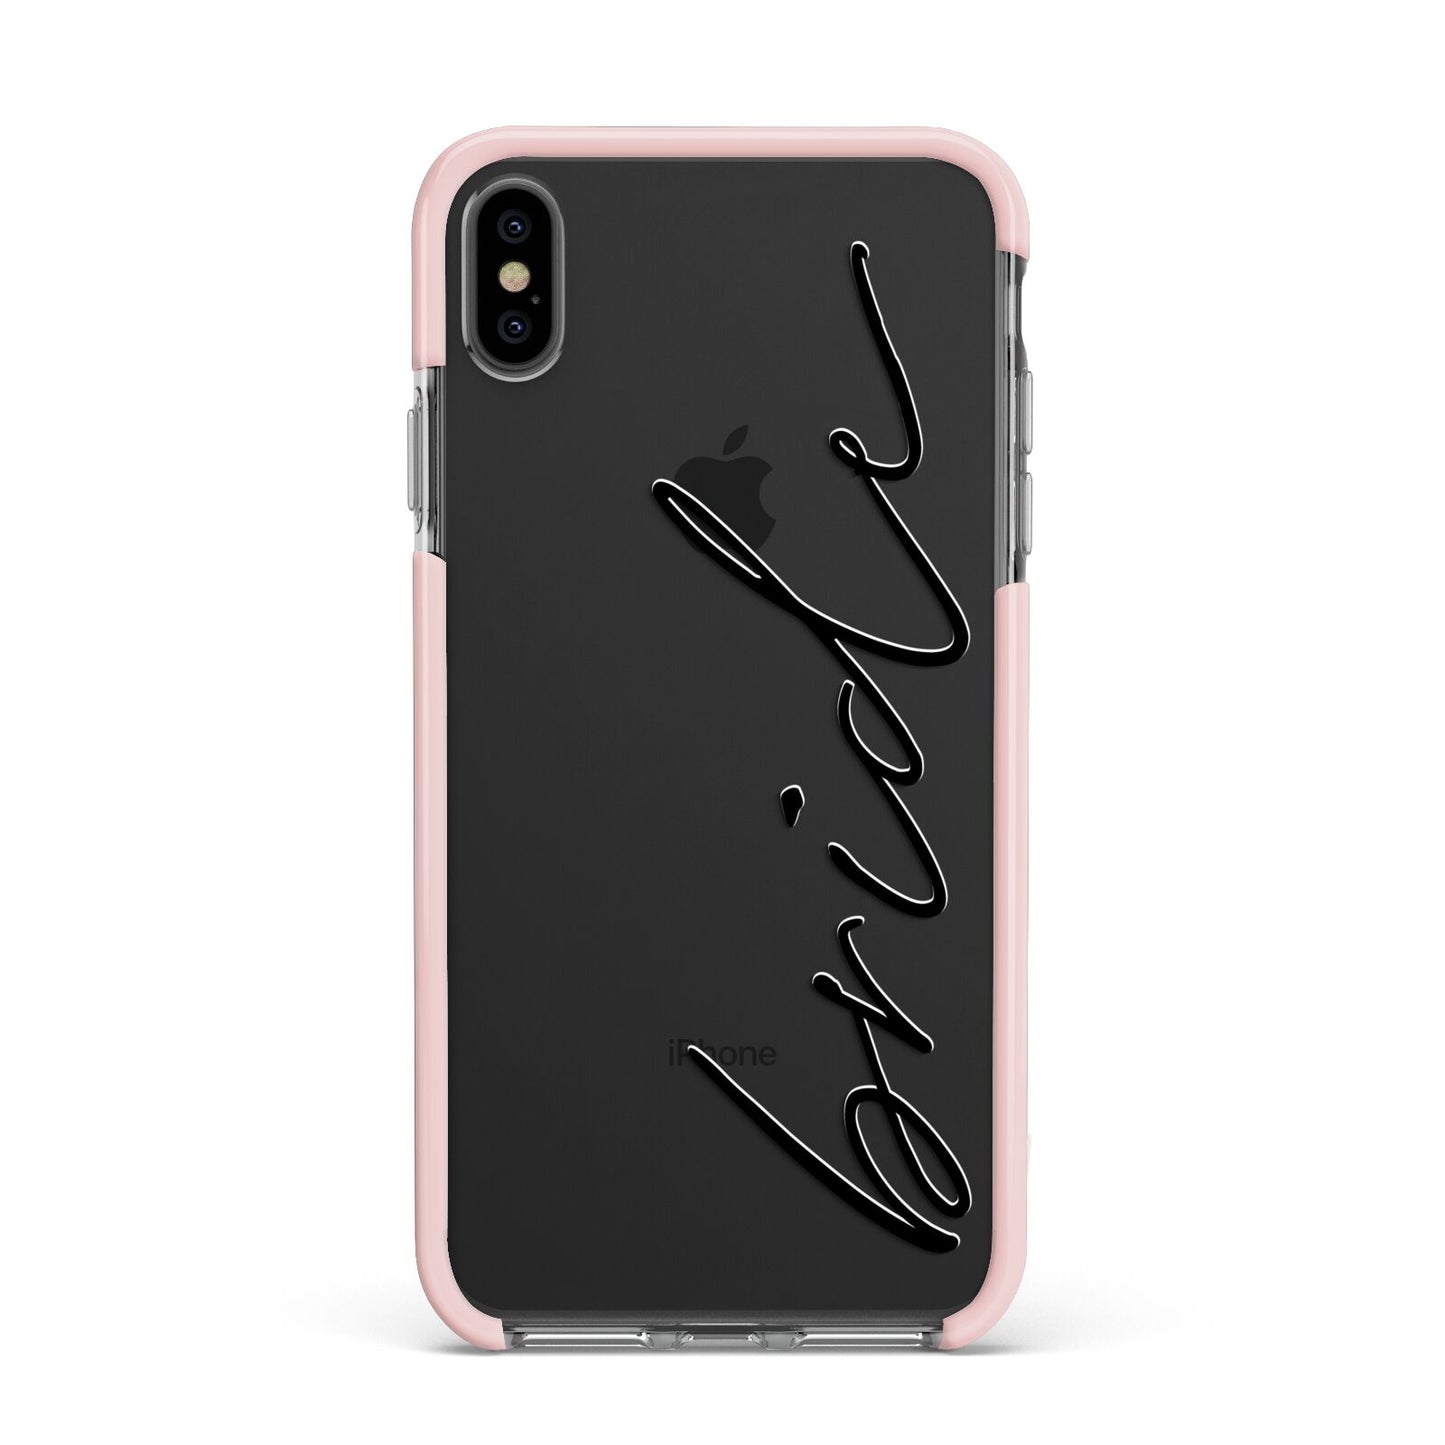 The Bride Apple iPhone Xs Max Impact Case Pink Edge on Black Phone